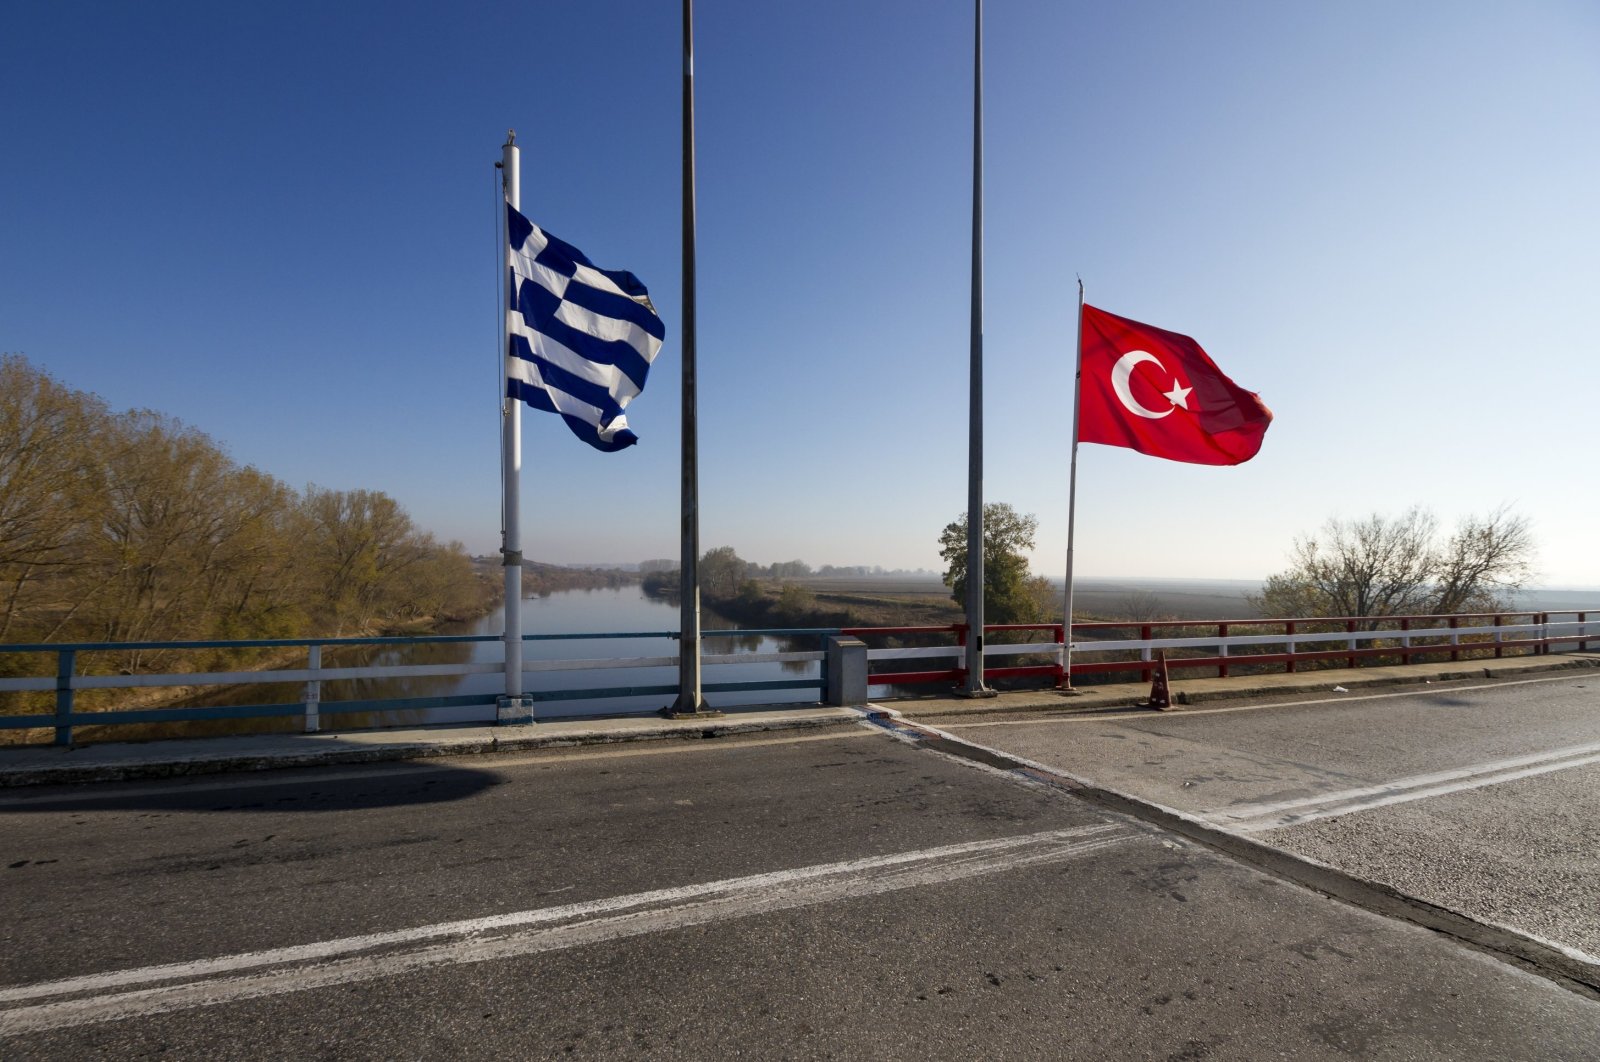 Anggota FETÖ mencoba melarikan diri ke Yunani ditahan oleh penjaga perbatasan